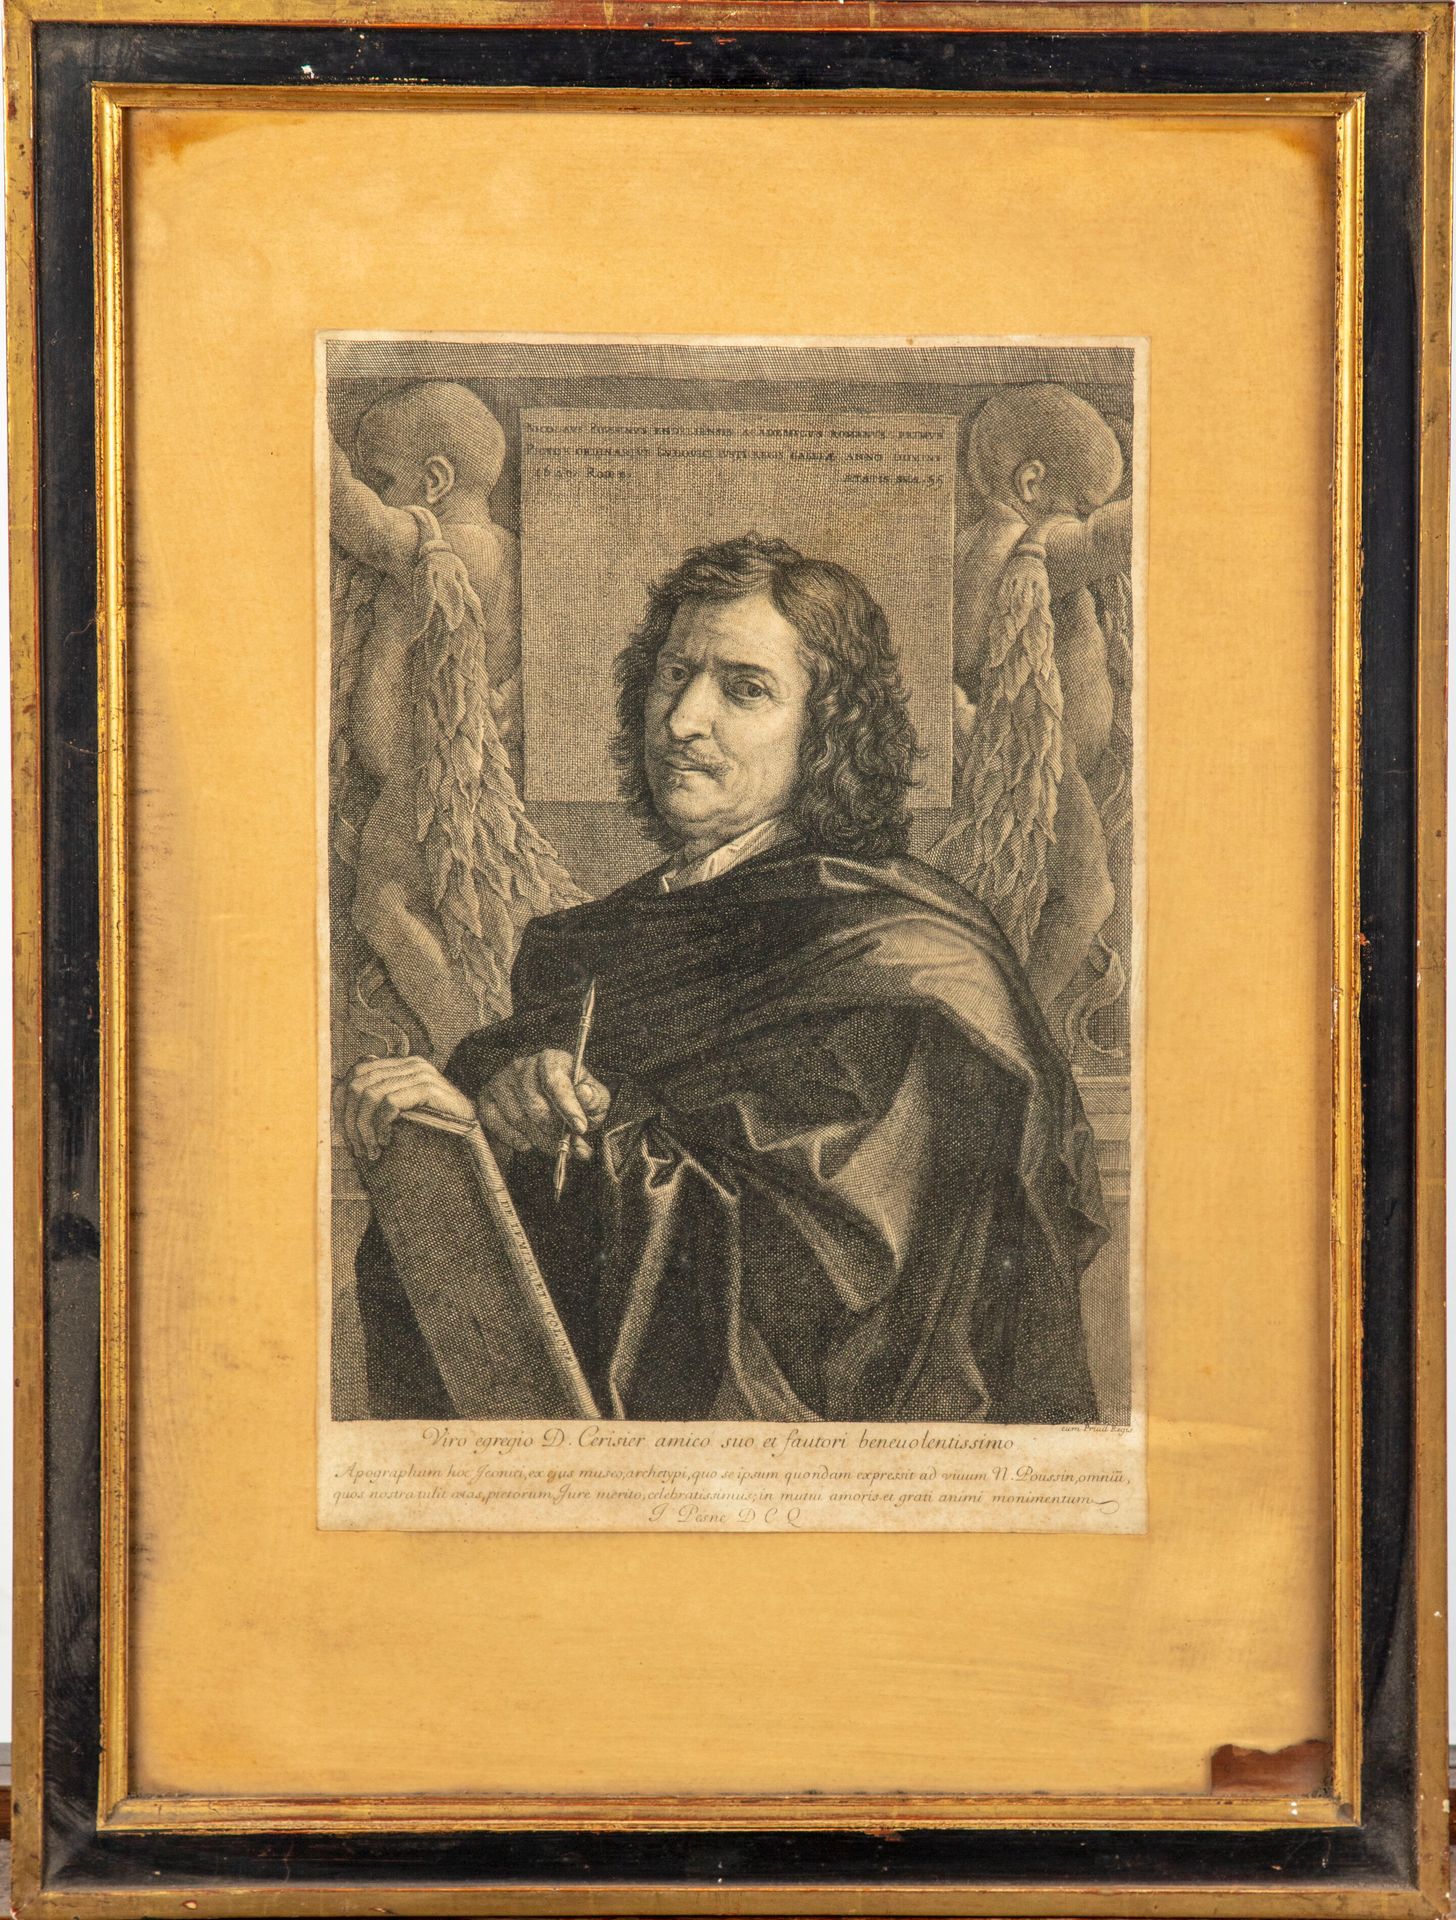 PASNE Jean PESNE (1623 - 1700)

Engraving after the self-portrait of Nicolas POU&hellip;